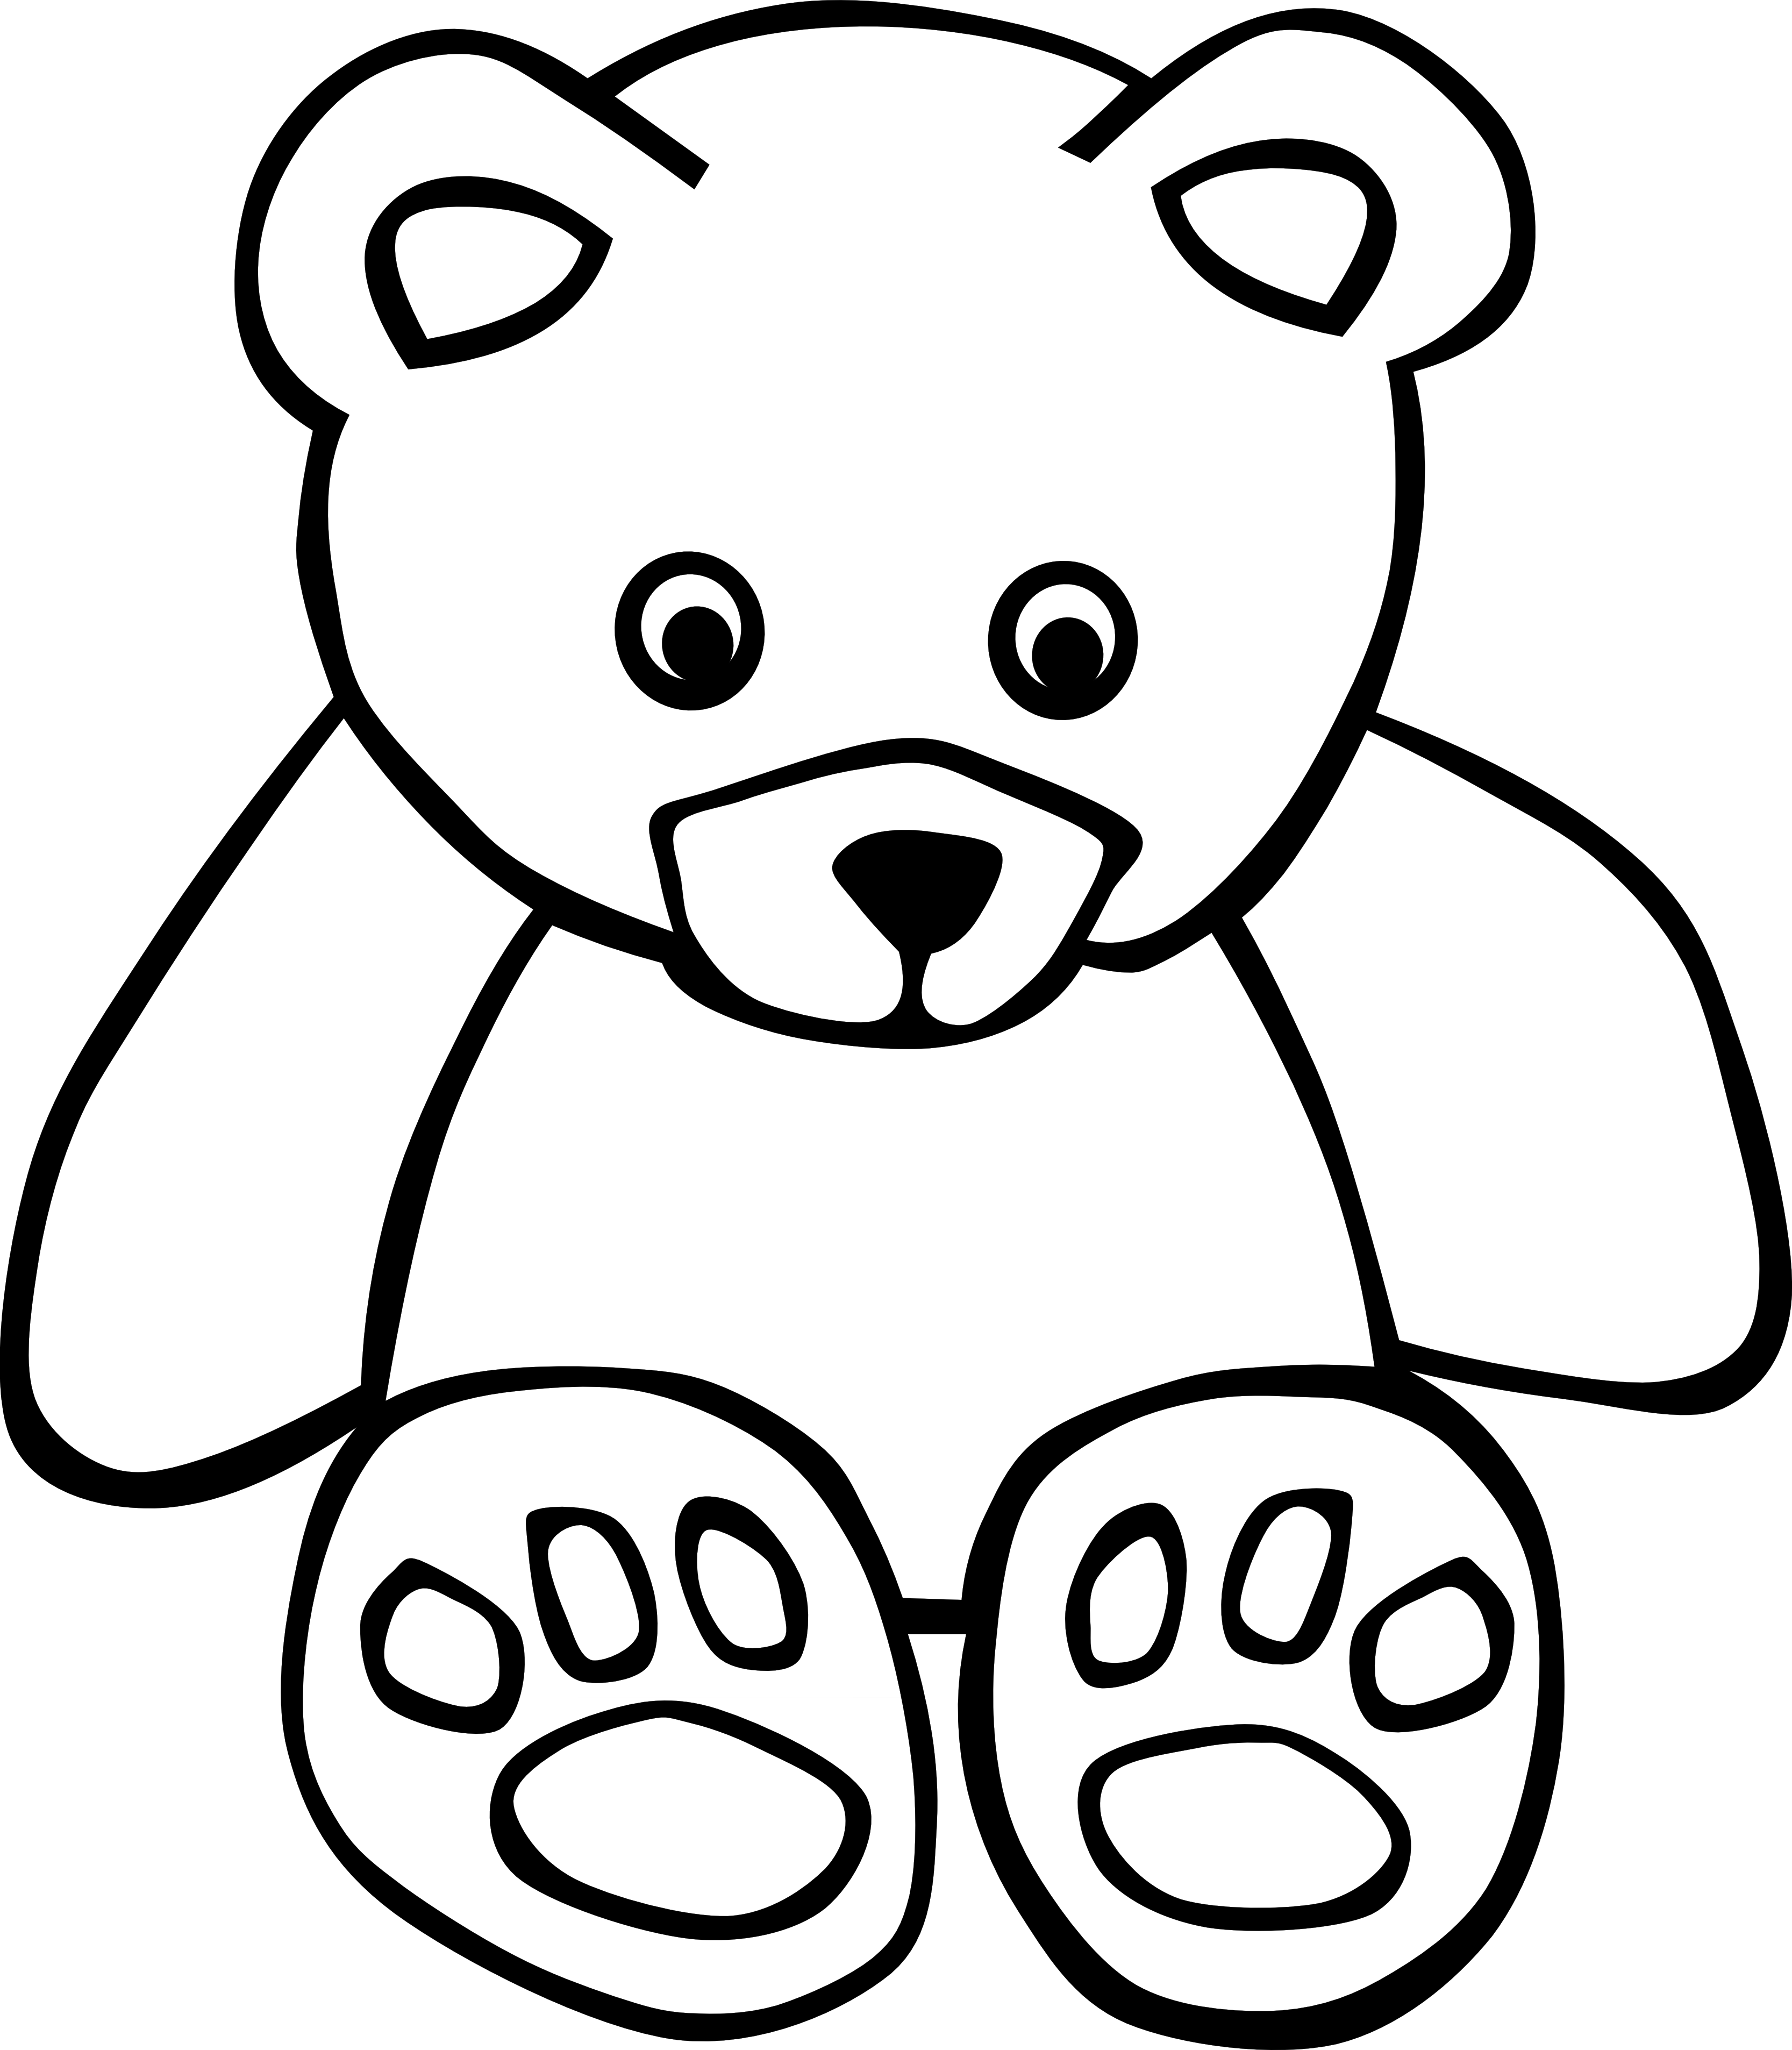 Teddy bear black and white te